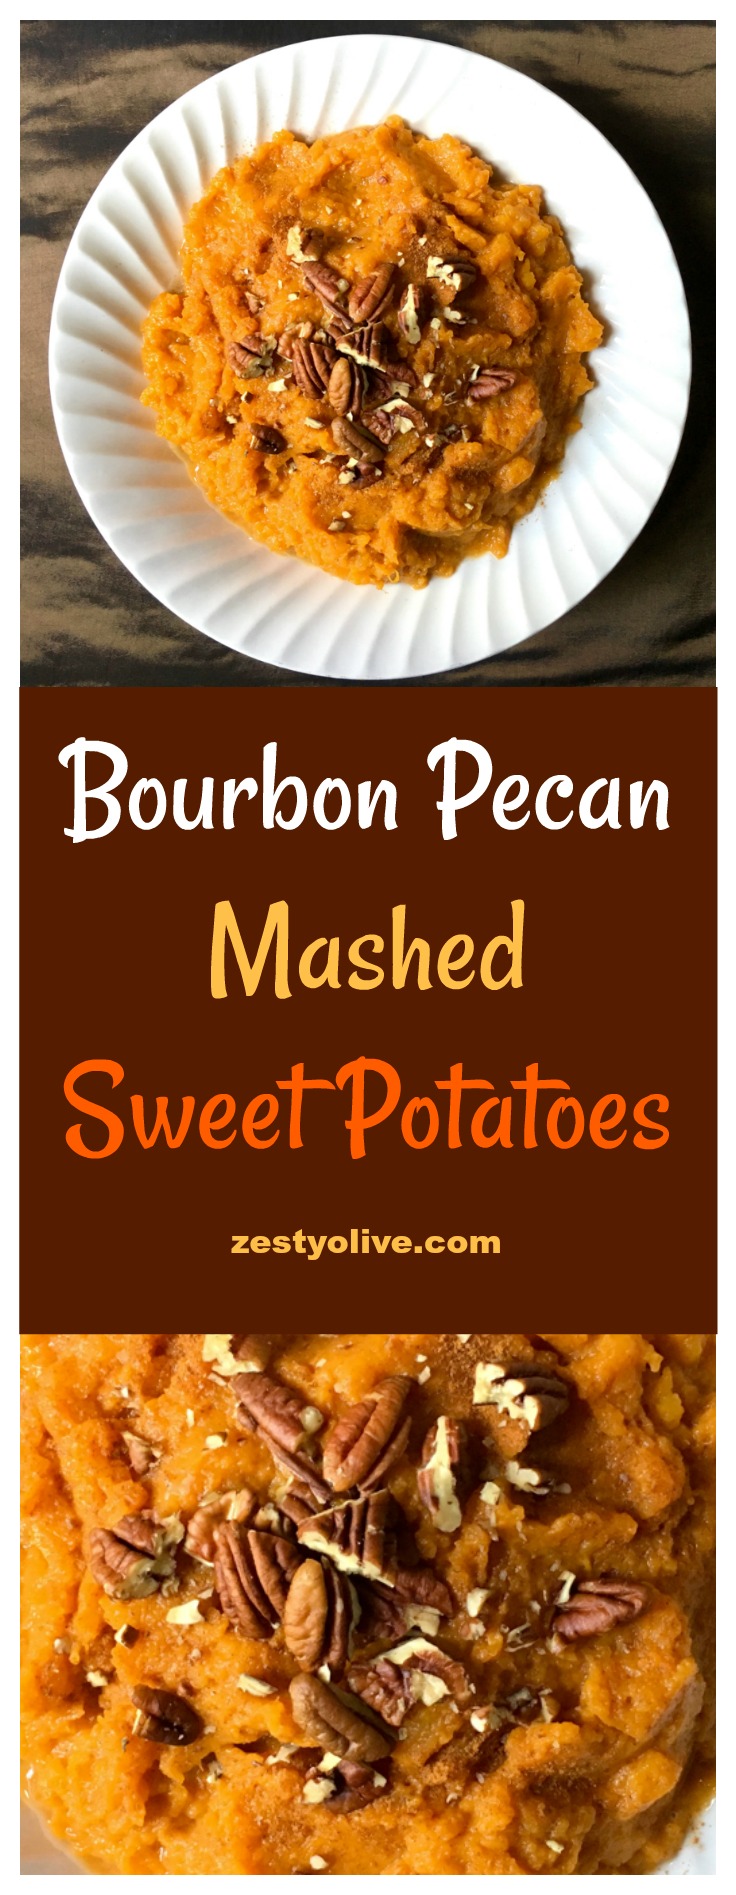 Bourbon Pecan Mashed Sweet Potatoes